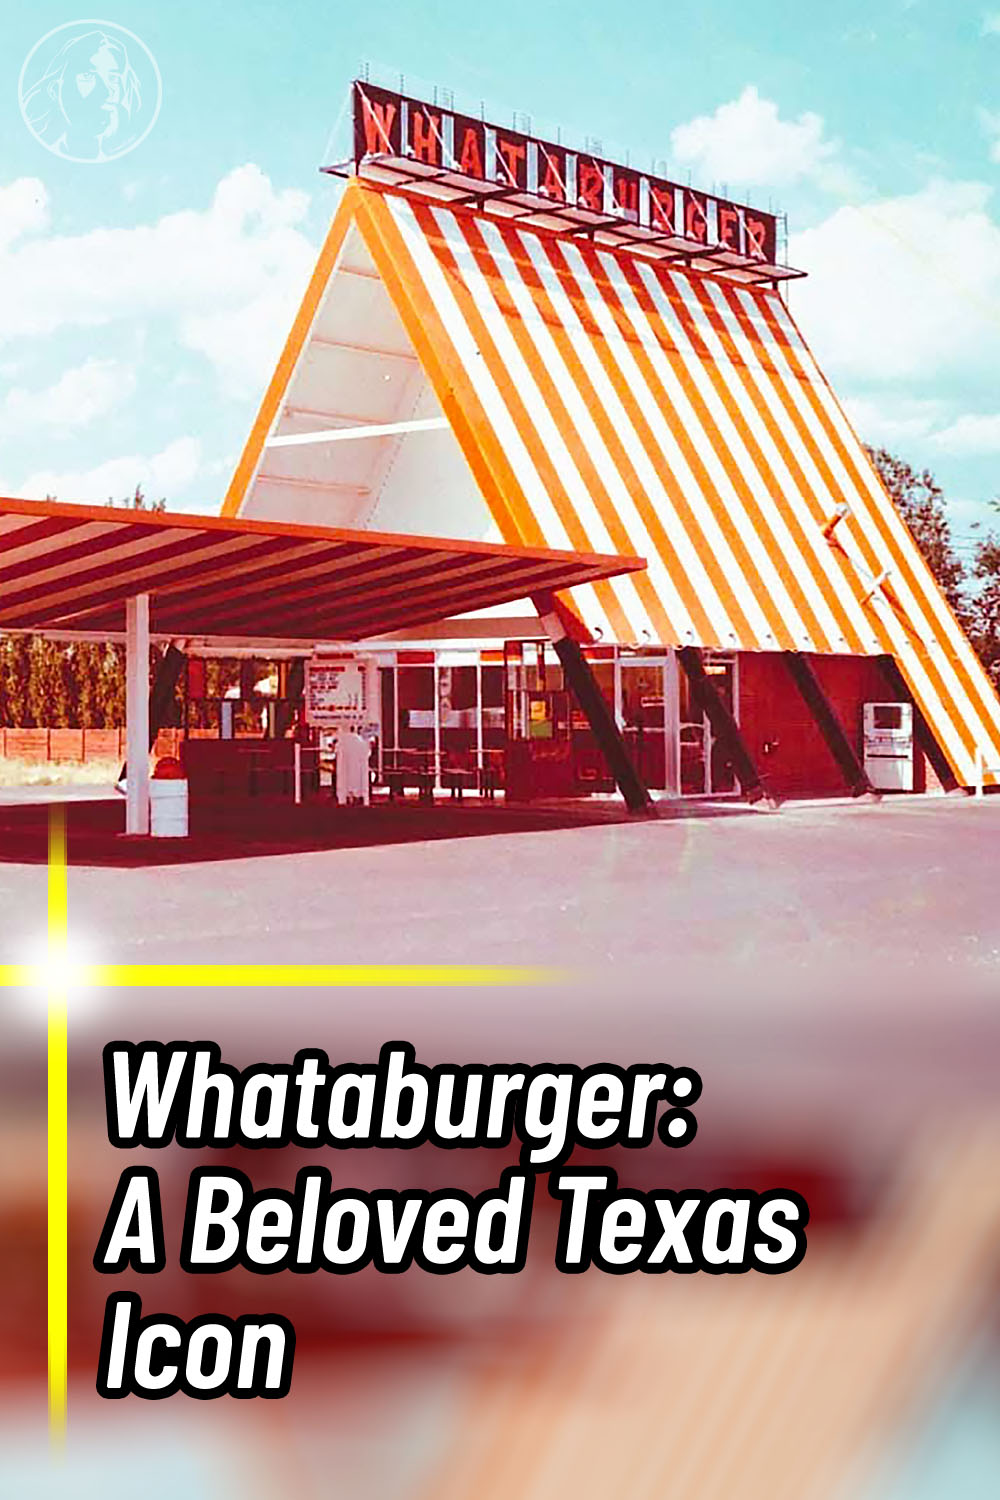 Whataburger: A Beloved Texas Icon